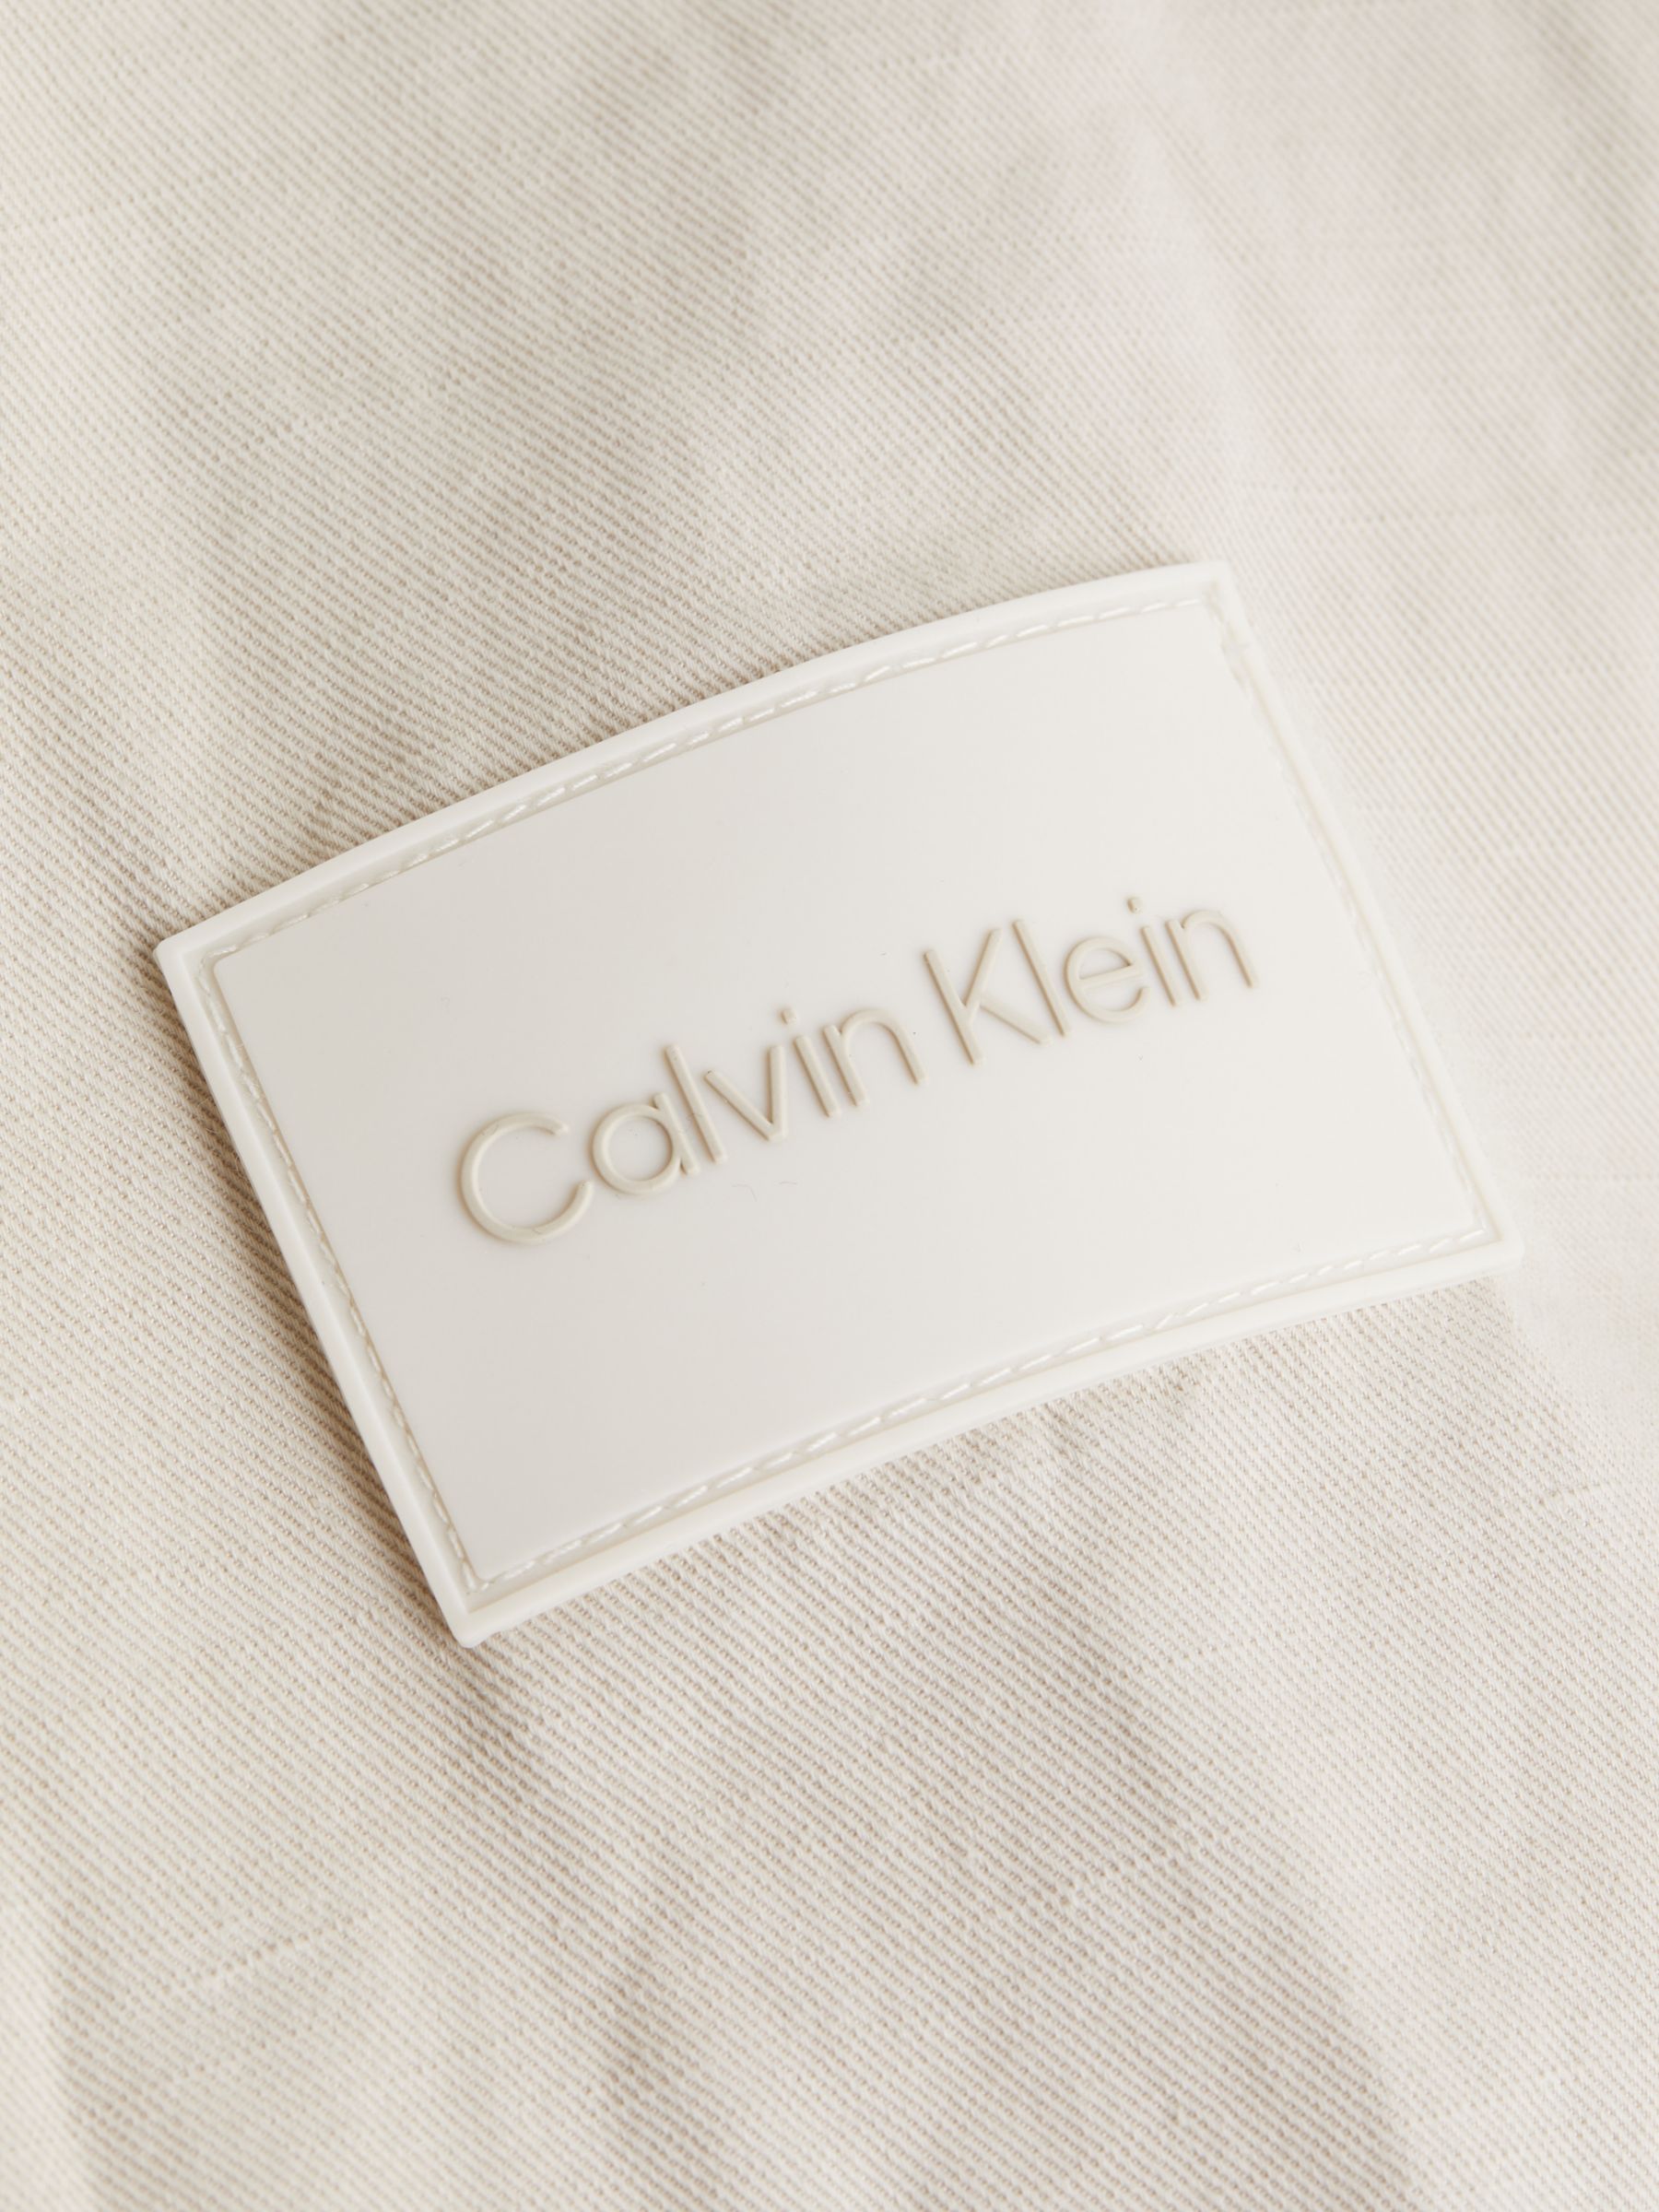 Calvin Klein Linen Overshirt, Stony Beige, XS